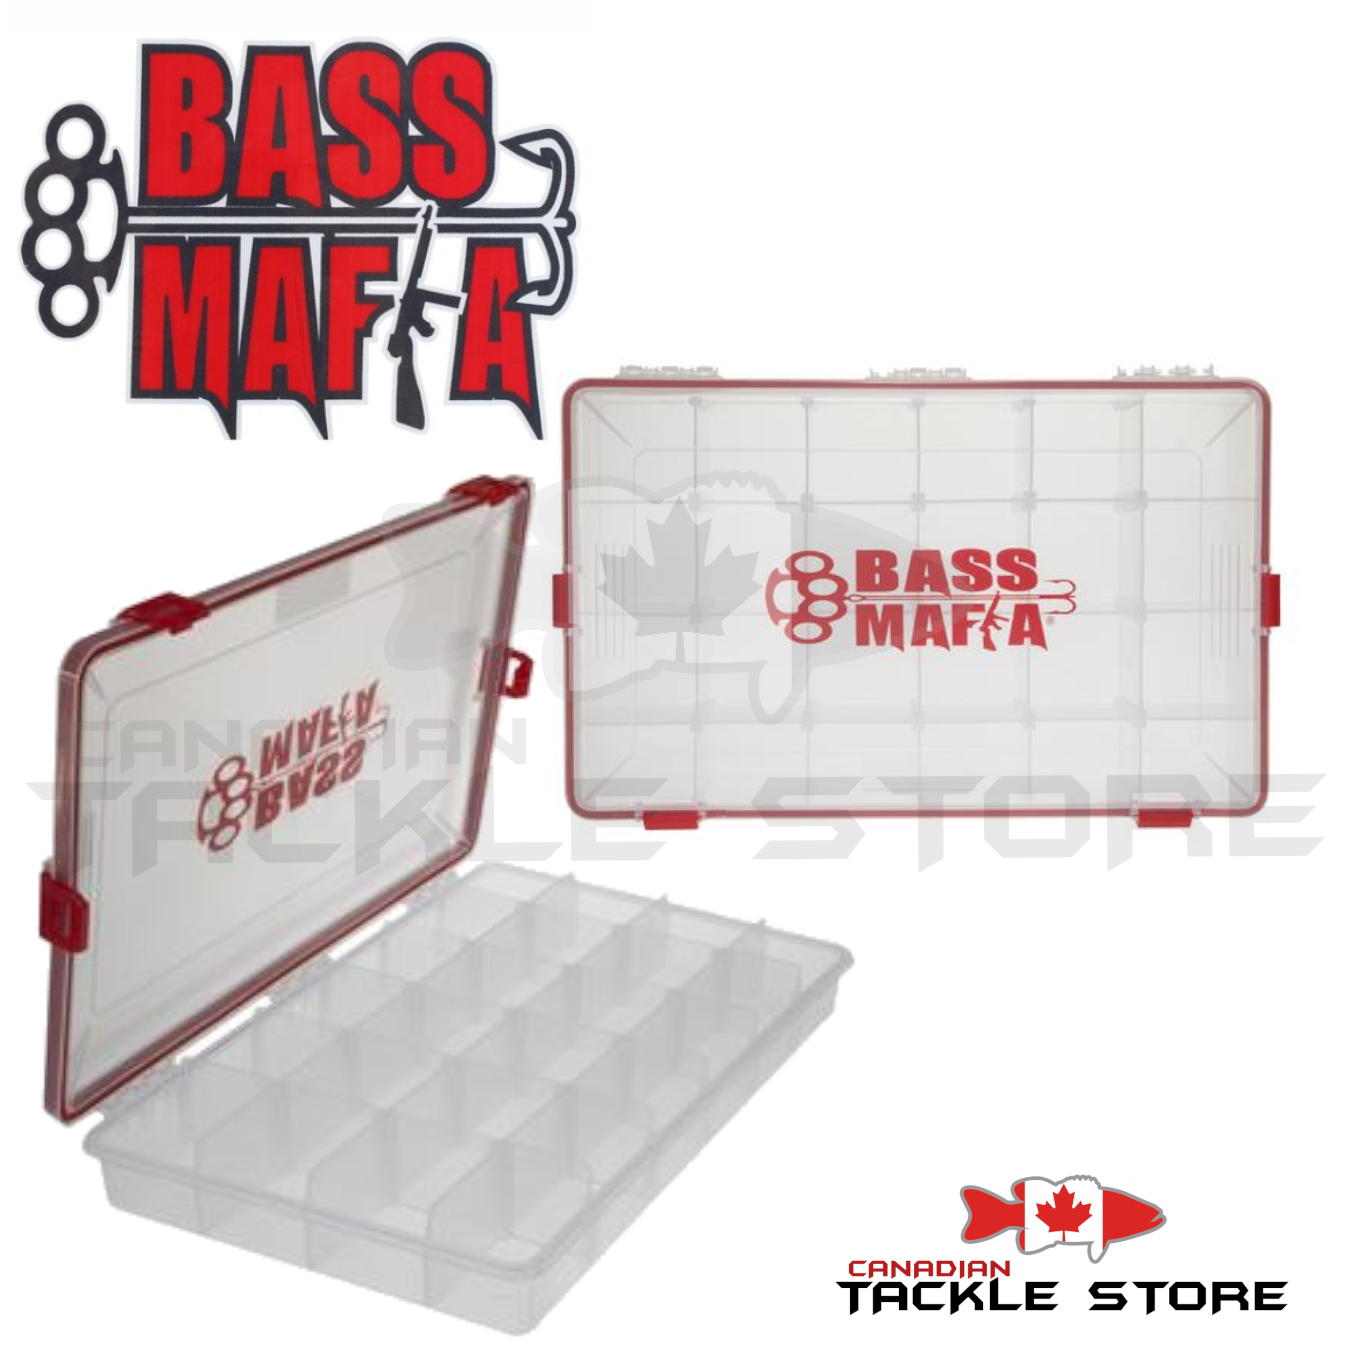 Bass Mafia – Canadian Tackle Store